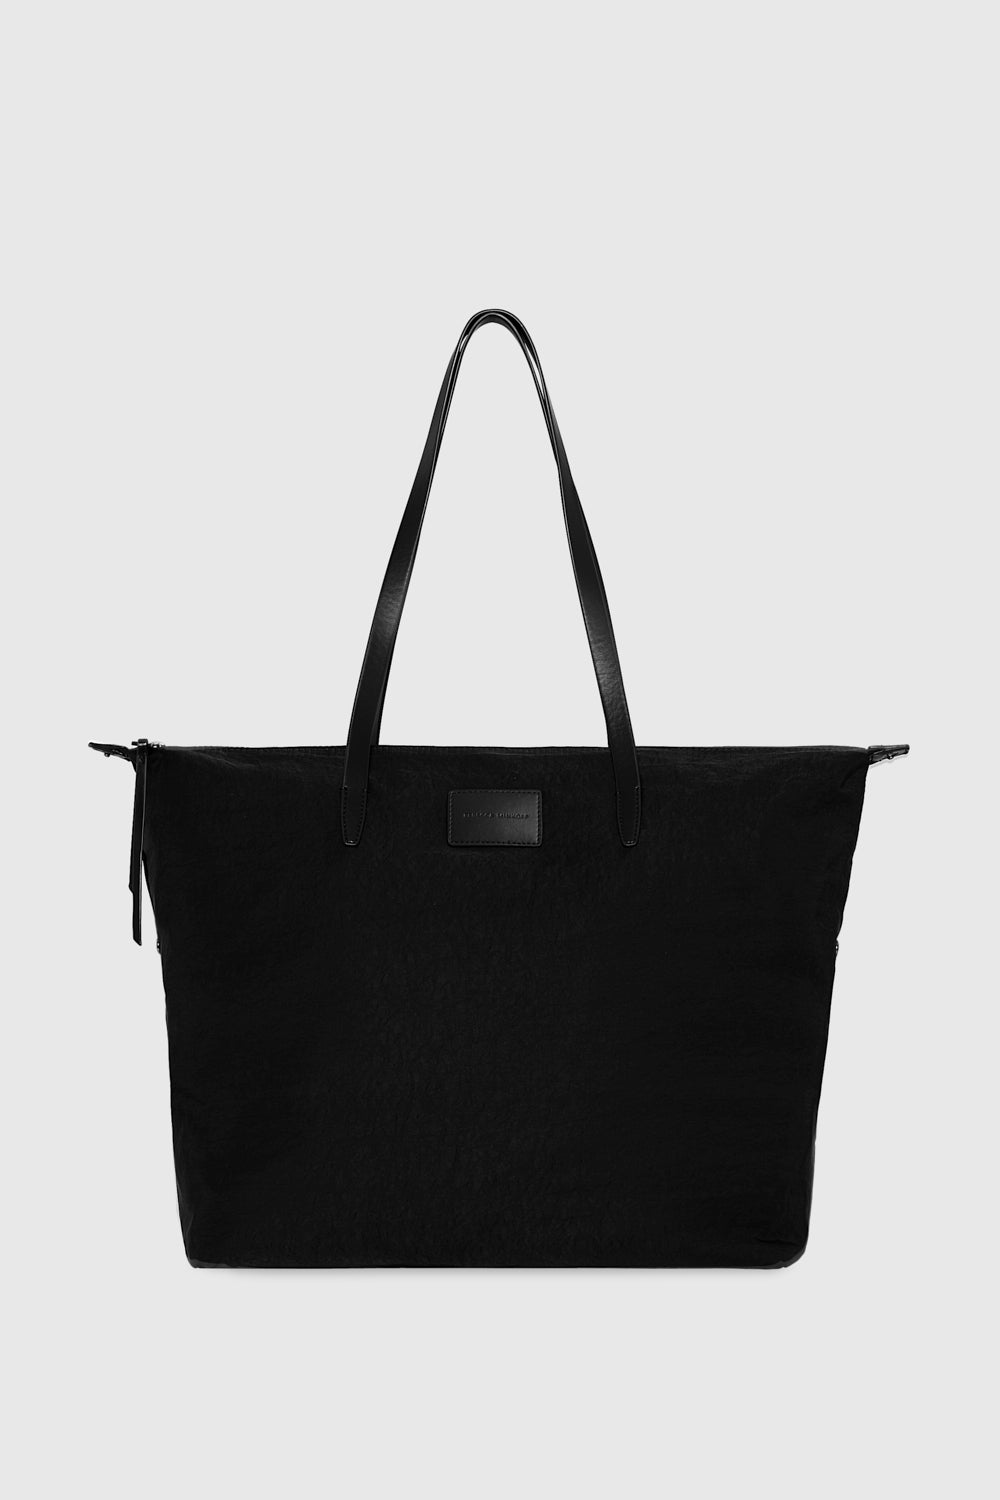 Rebecca Minkoff Washed Nylon Tote Bag in Black